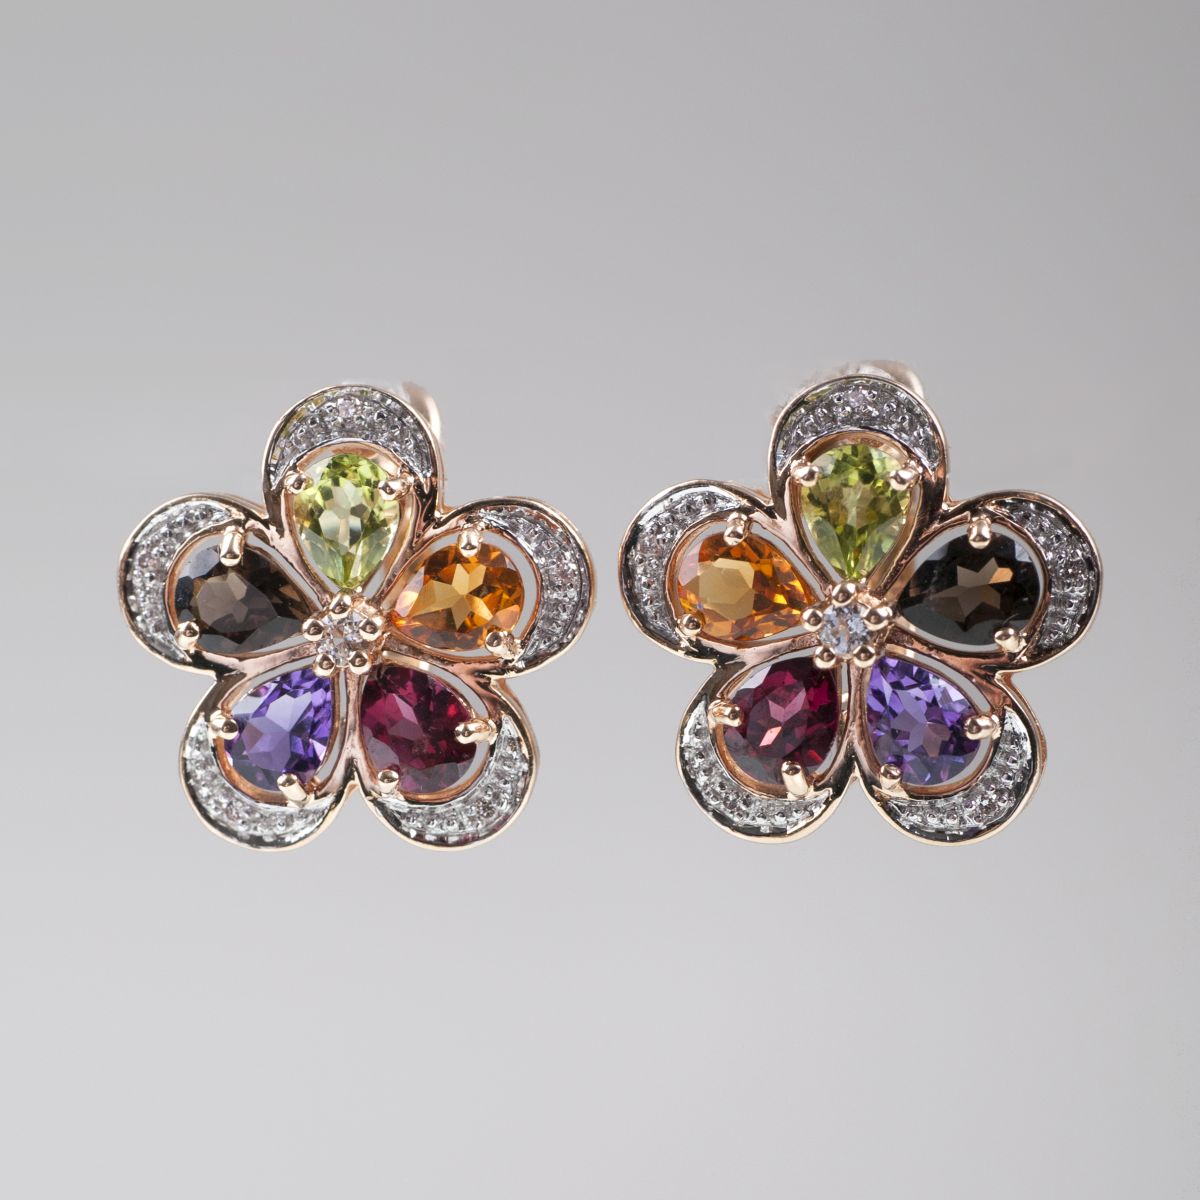 A pair of flowershaped earrings with multicoloured precious gemstones